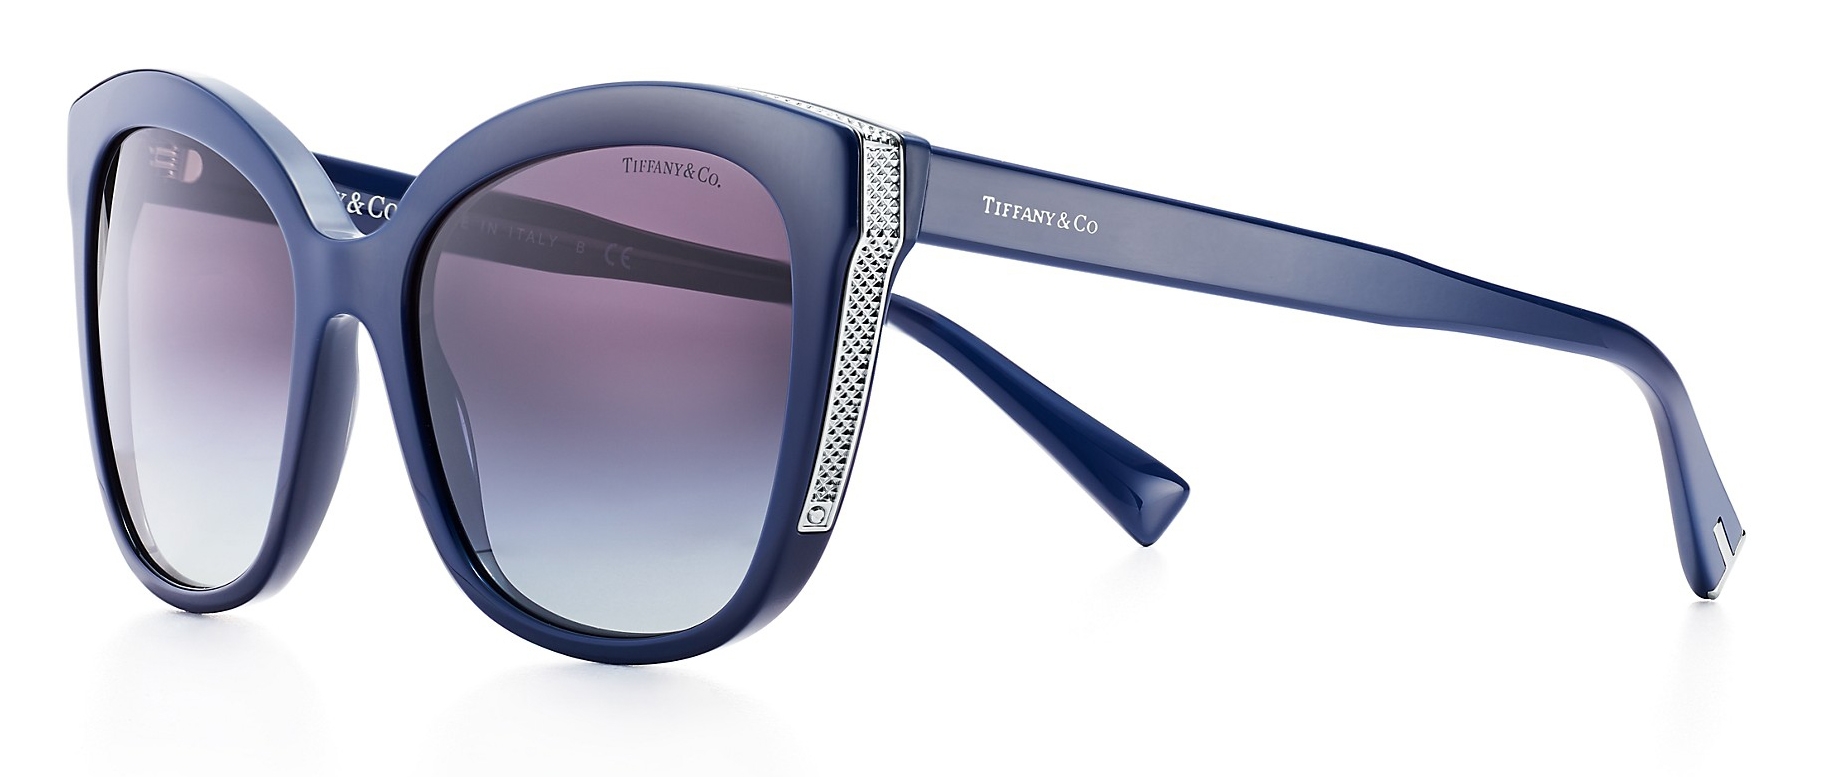 tiffany sunglasses diamond